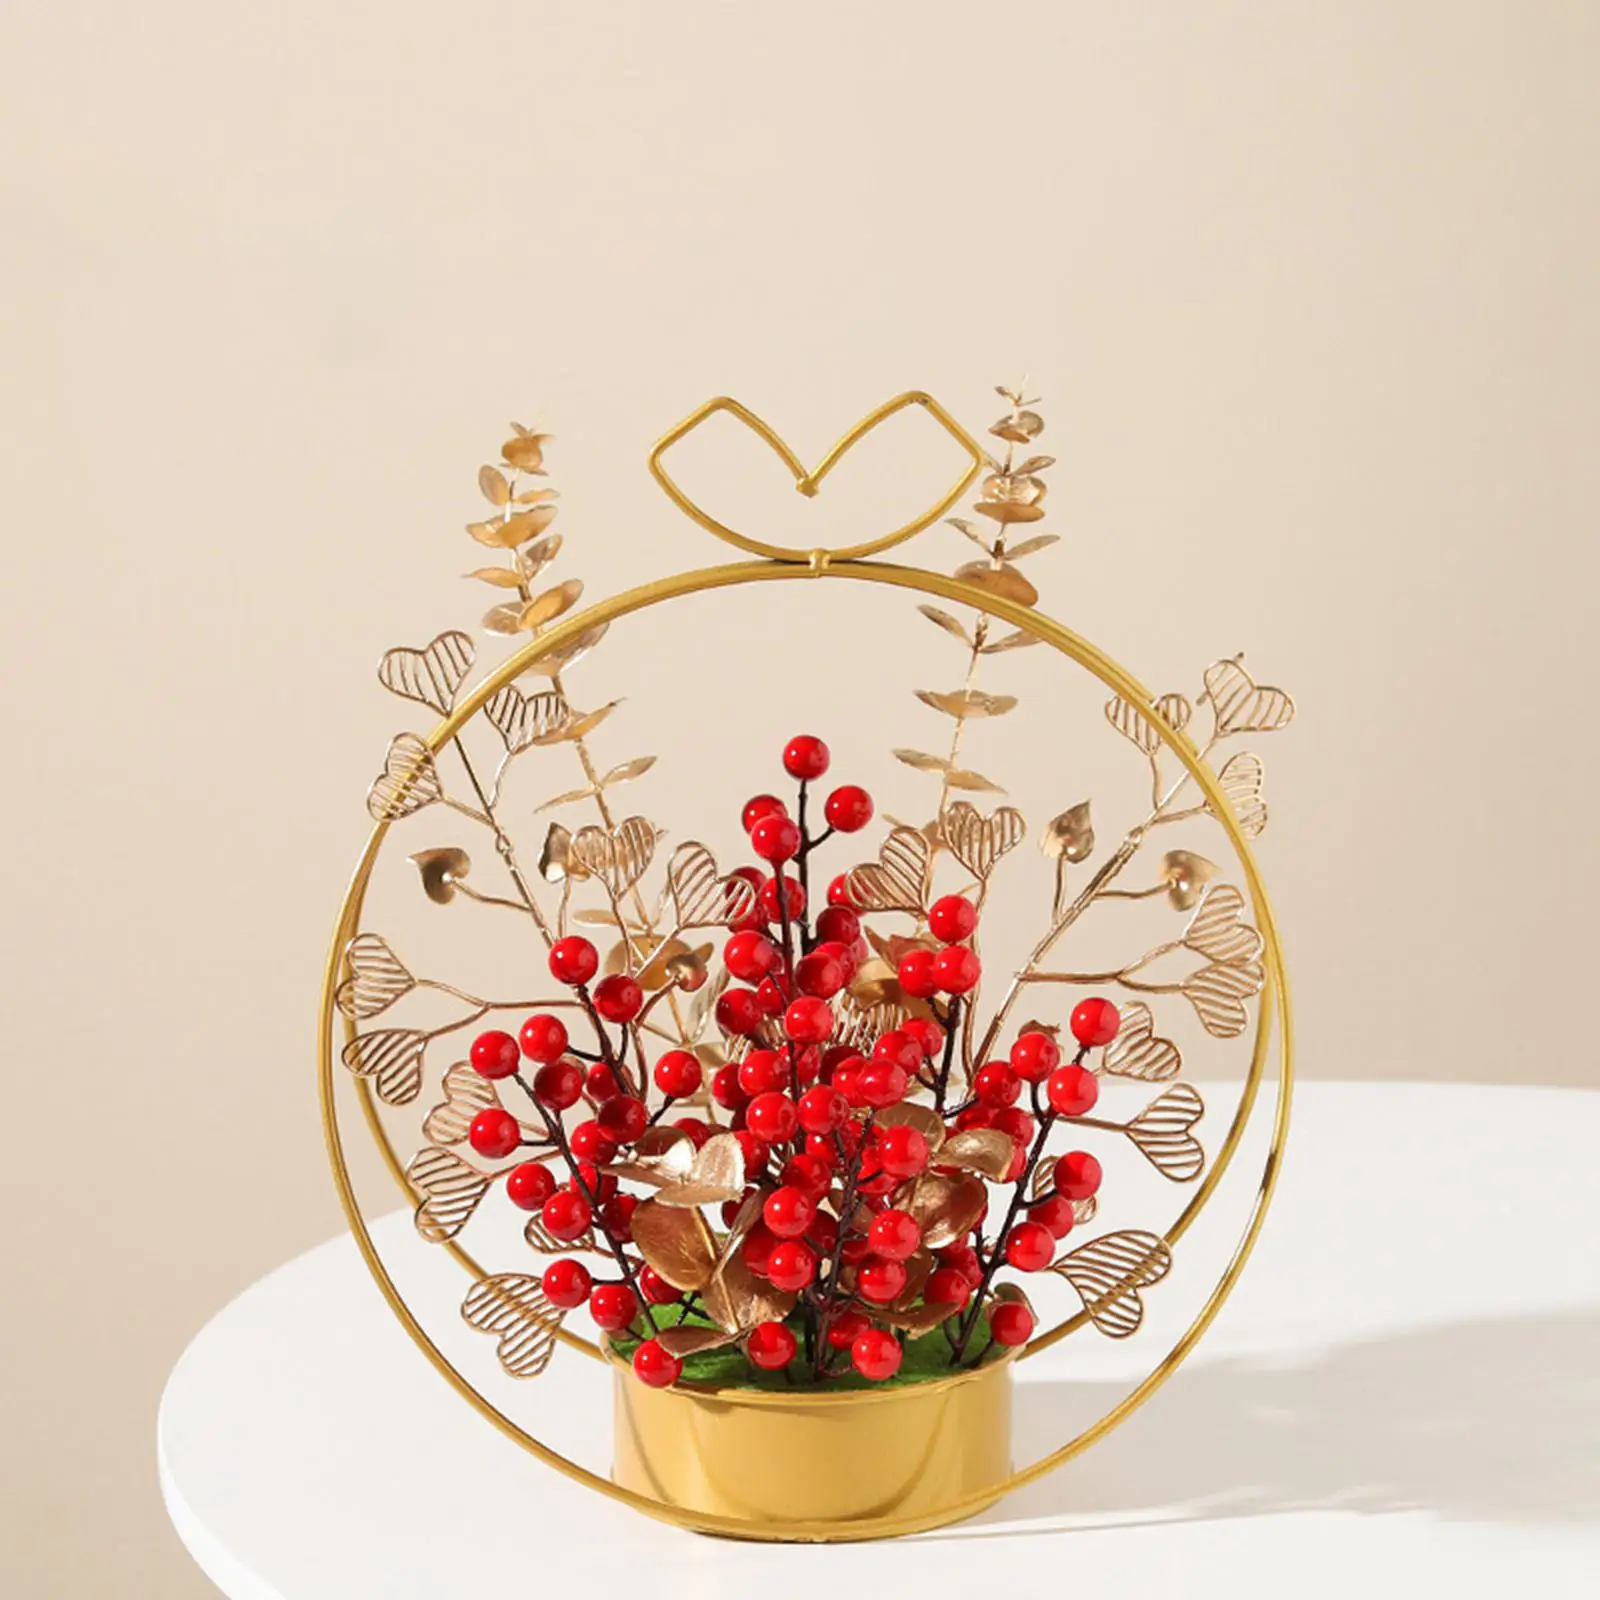 Flower Basket Ornament Decor Table Centerpiece Harvest Fall for Thanksgiving